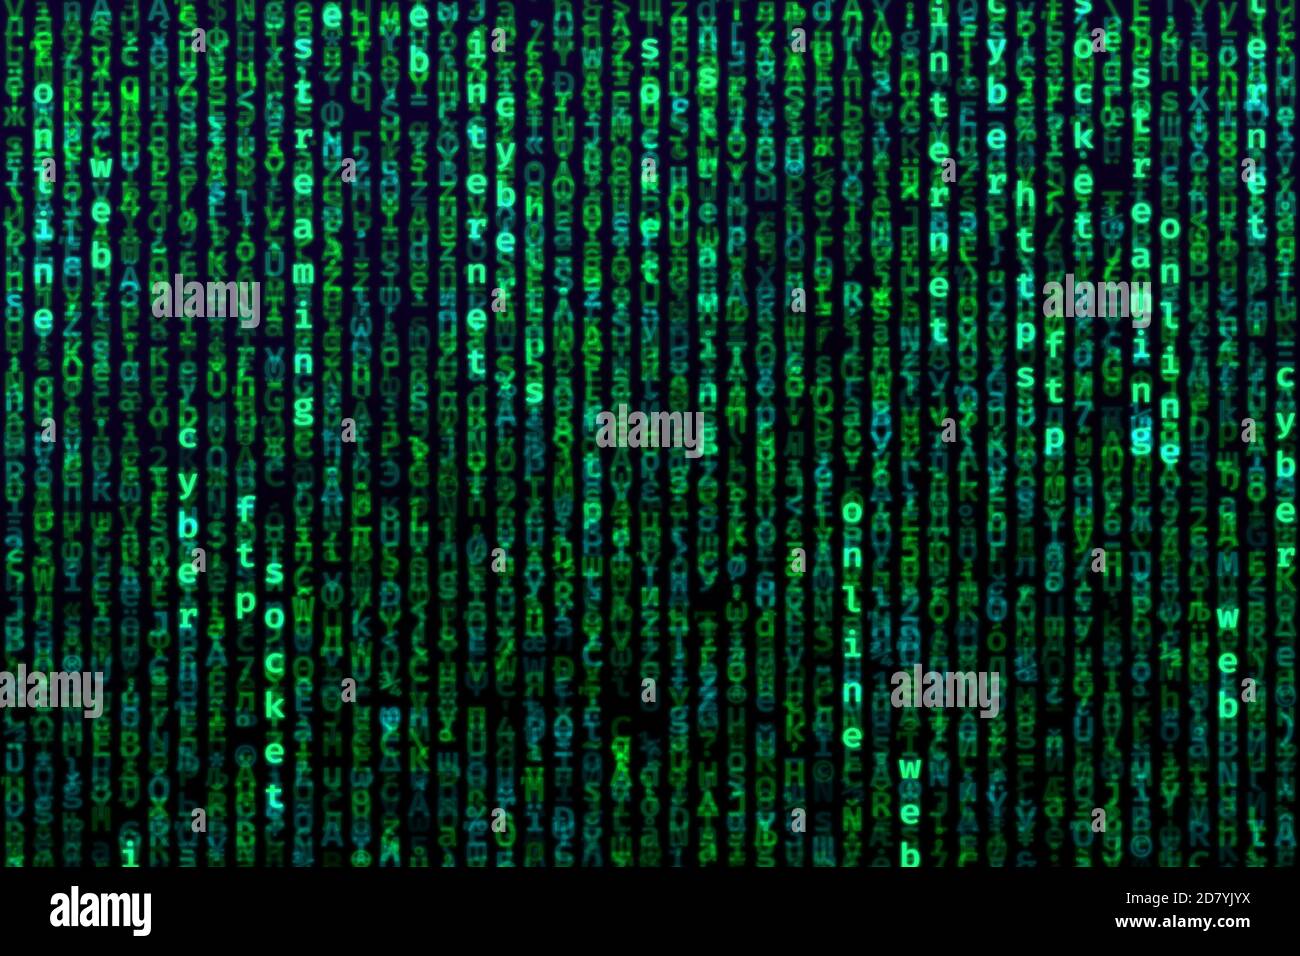 Computer generated background symbolizing digital information technology Stock Photo